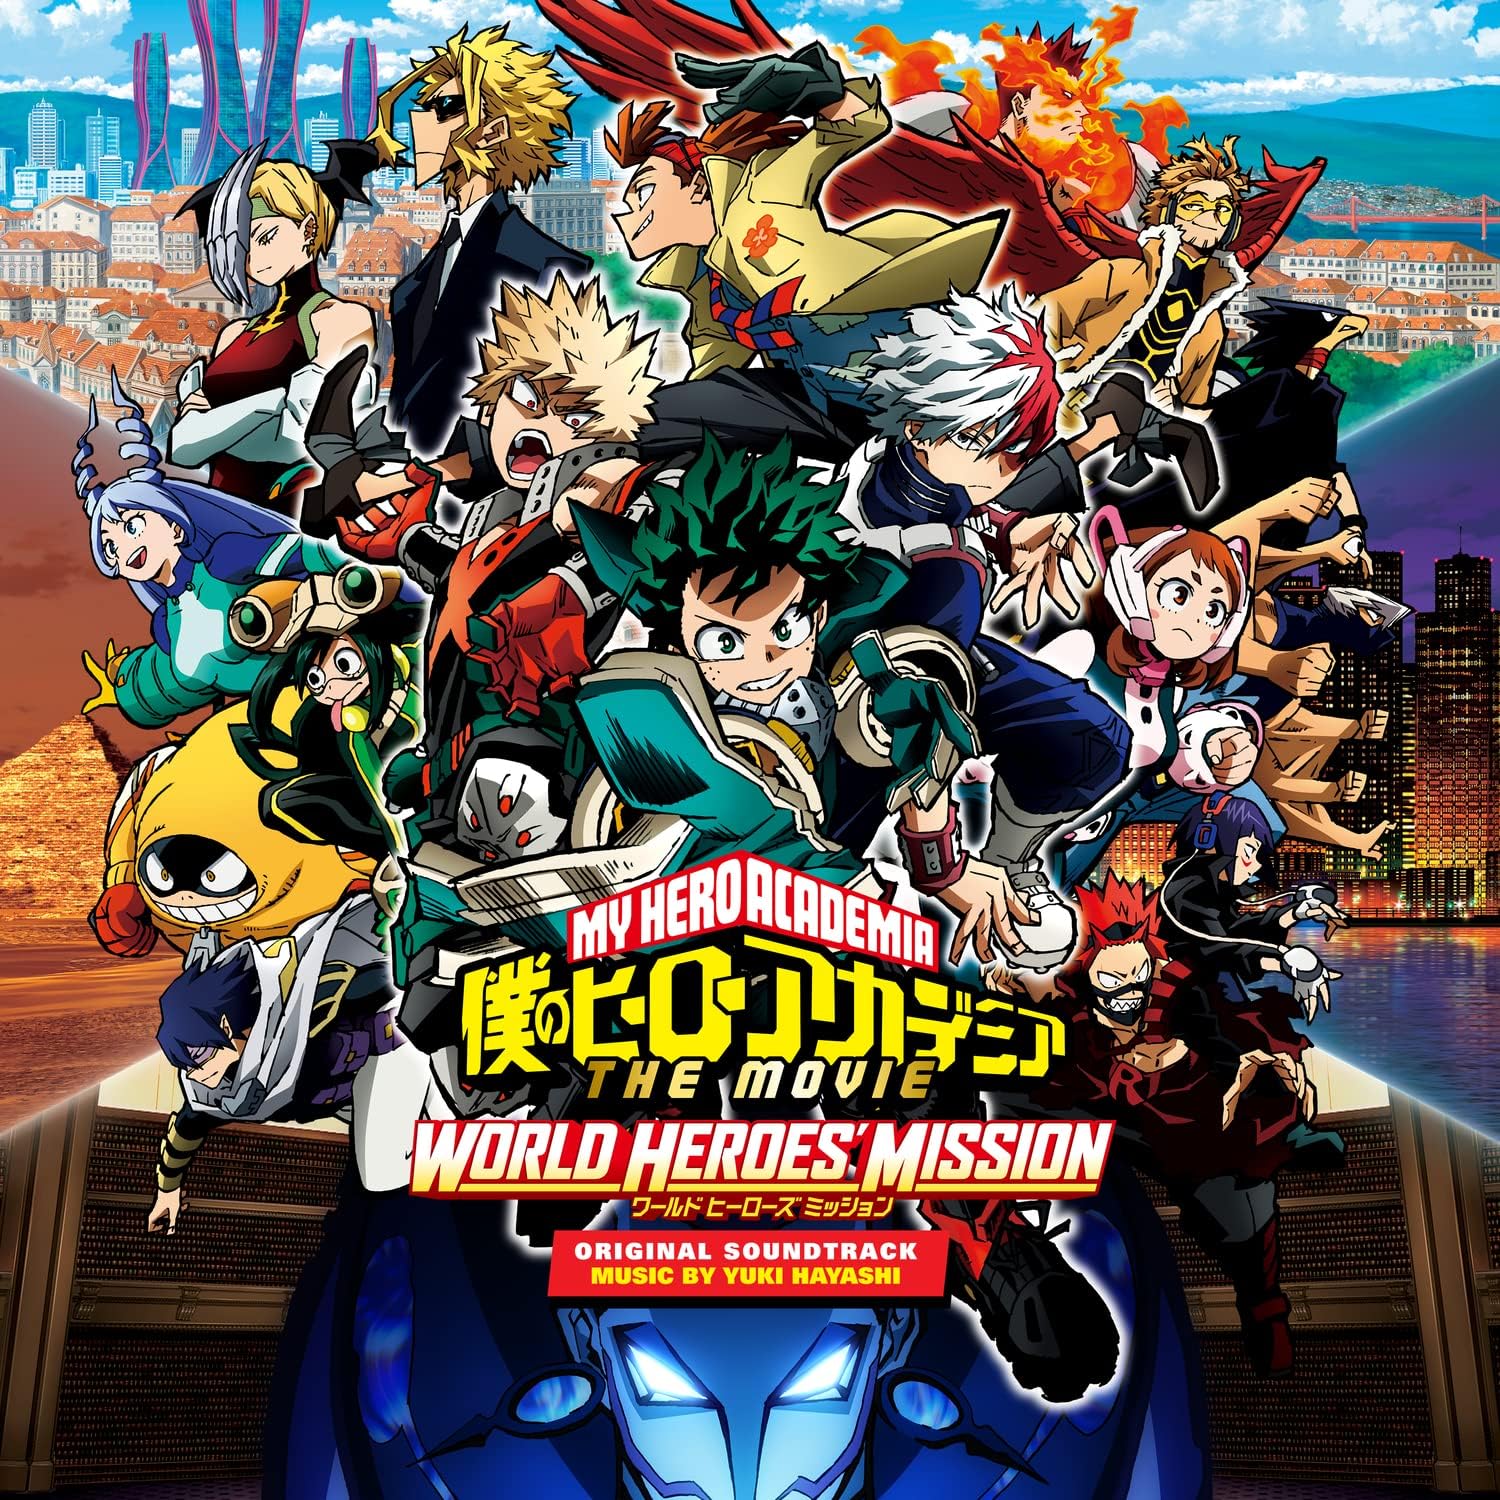 (ANIMATION MUSIC) / (アニメーション音楽) / MY HERO ACADEMIA: WORLD HEROES' MISSION (ORIGINAL SOUNDTRACK)